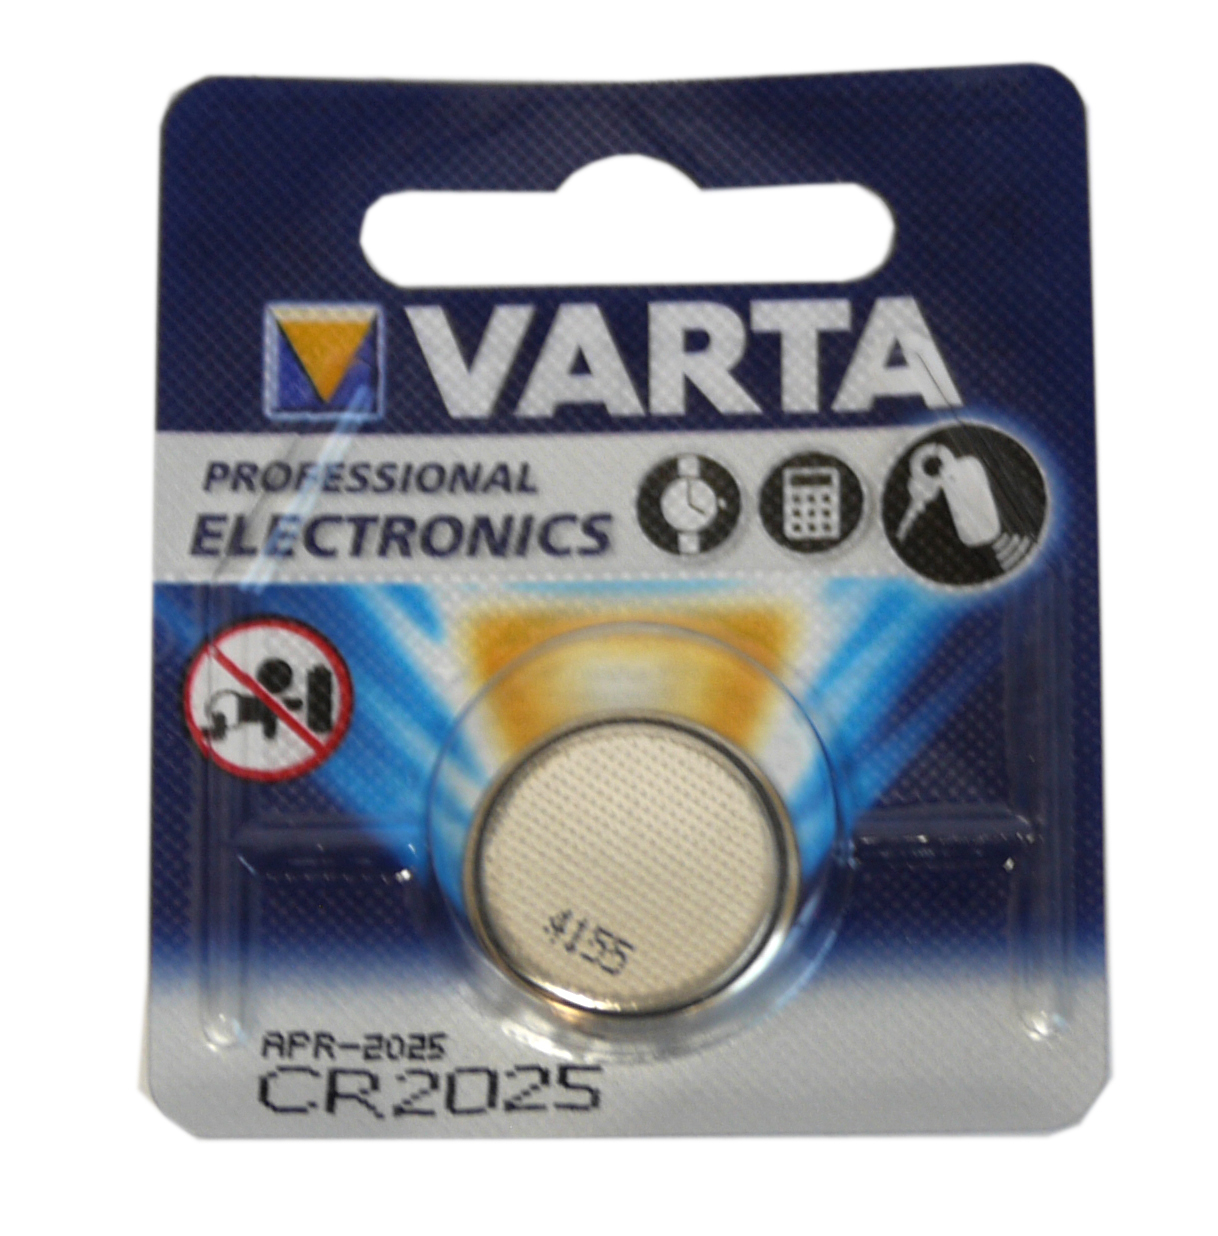 53685 - Varta electronics CR2025, primary lithium Button, set of 1